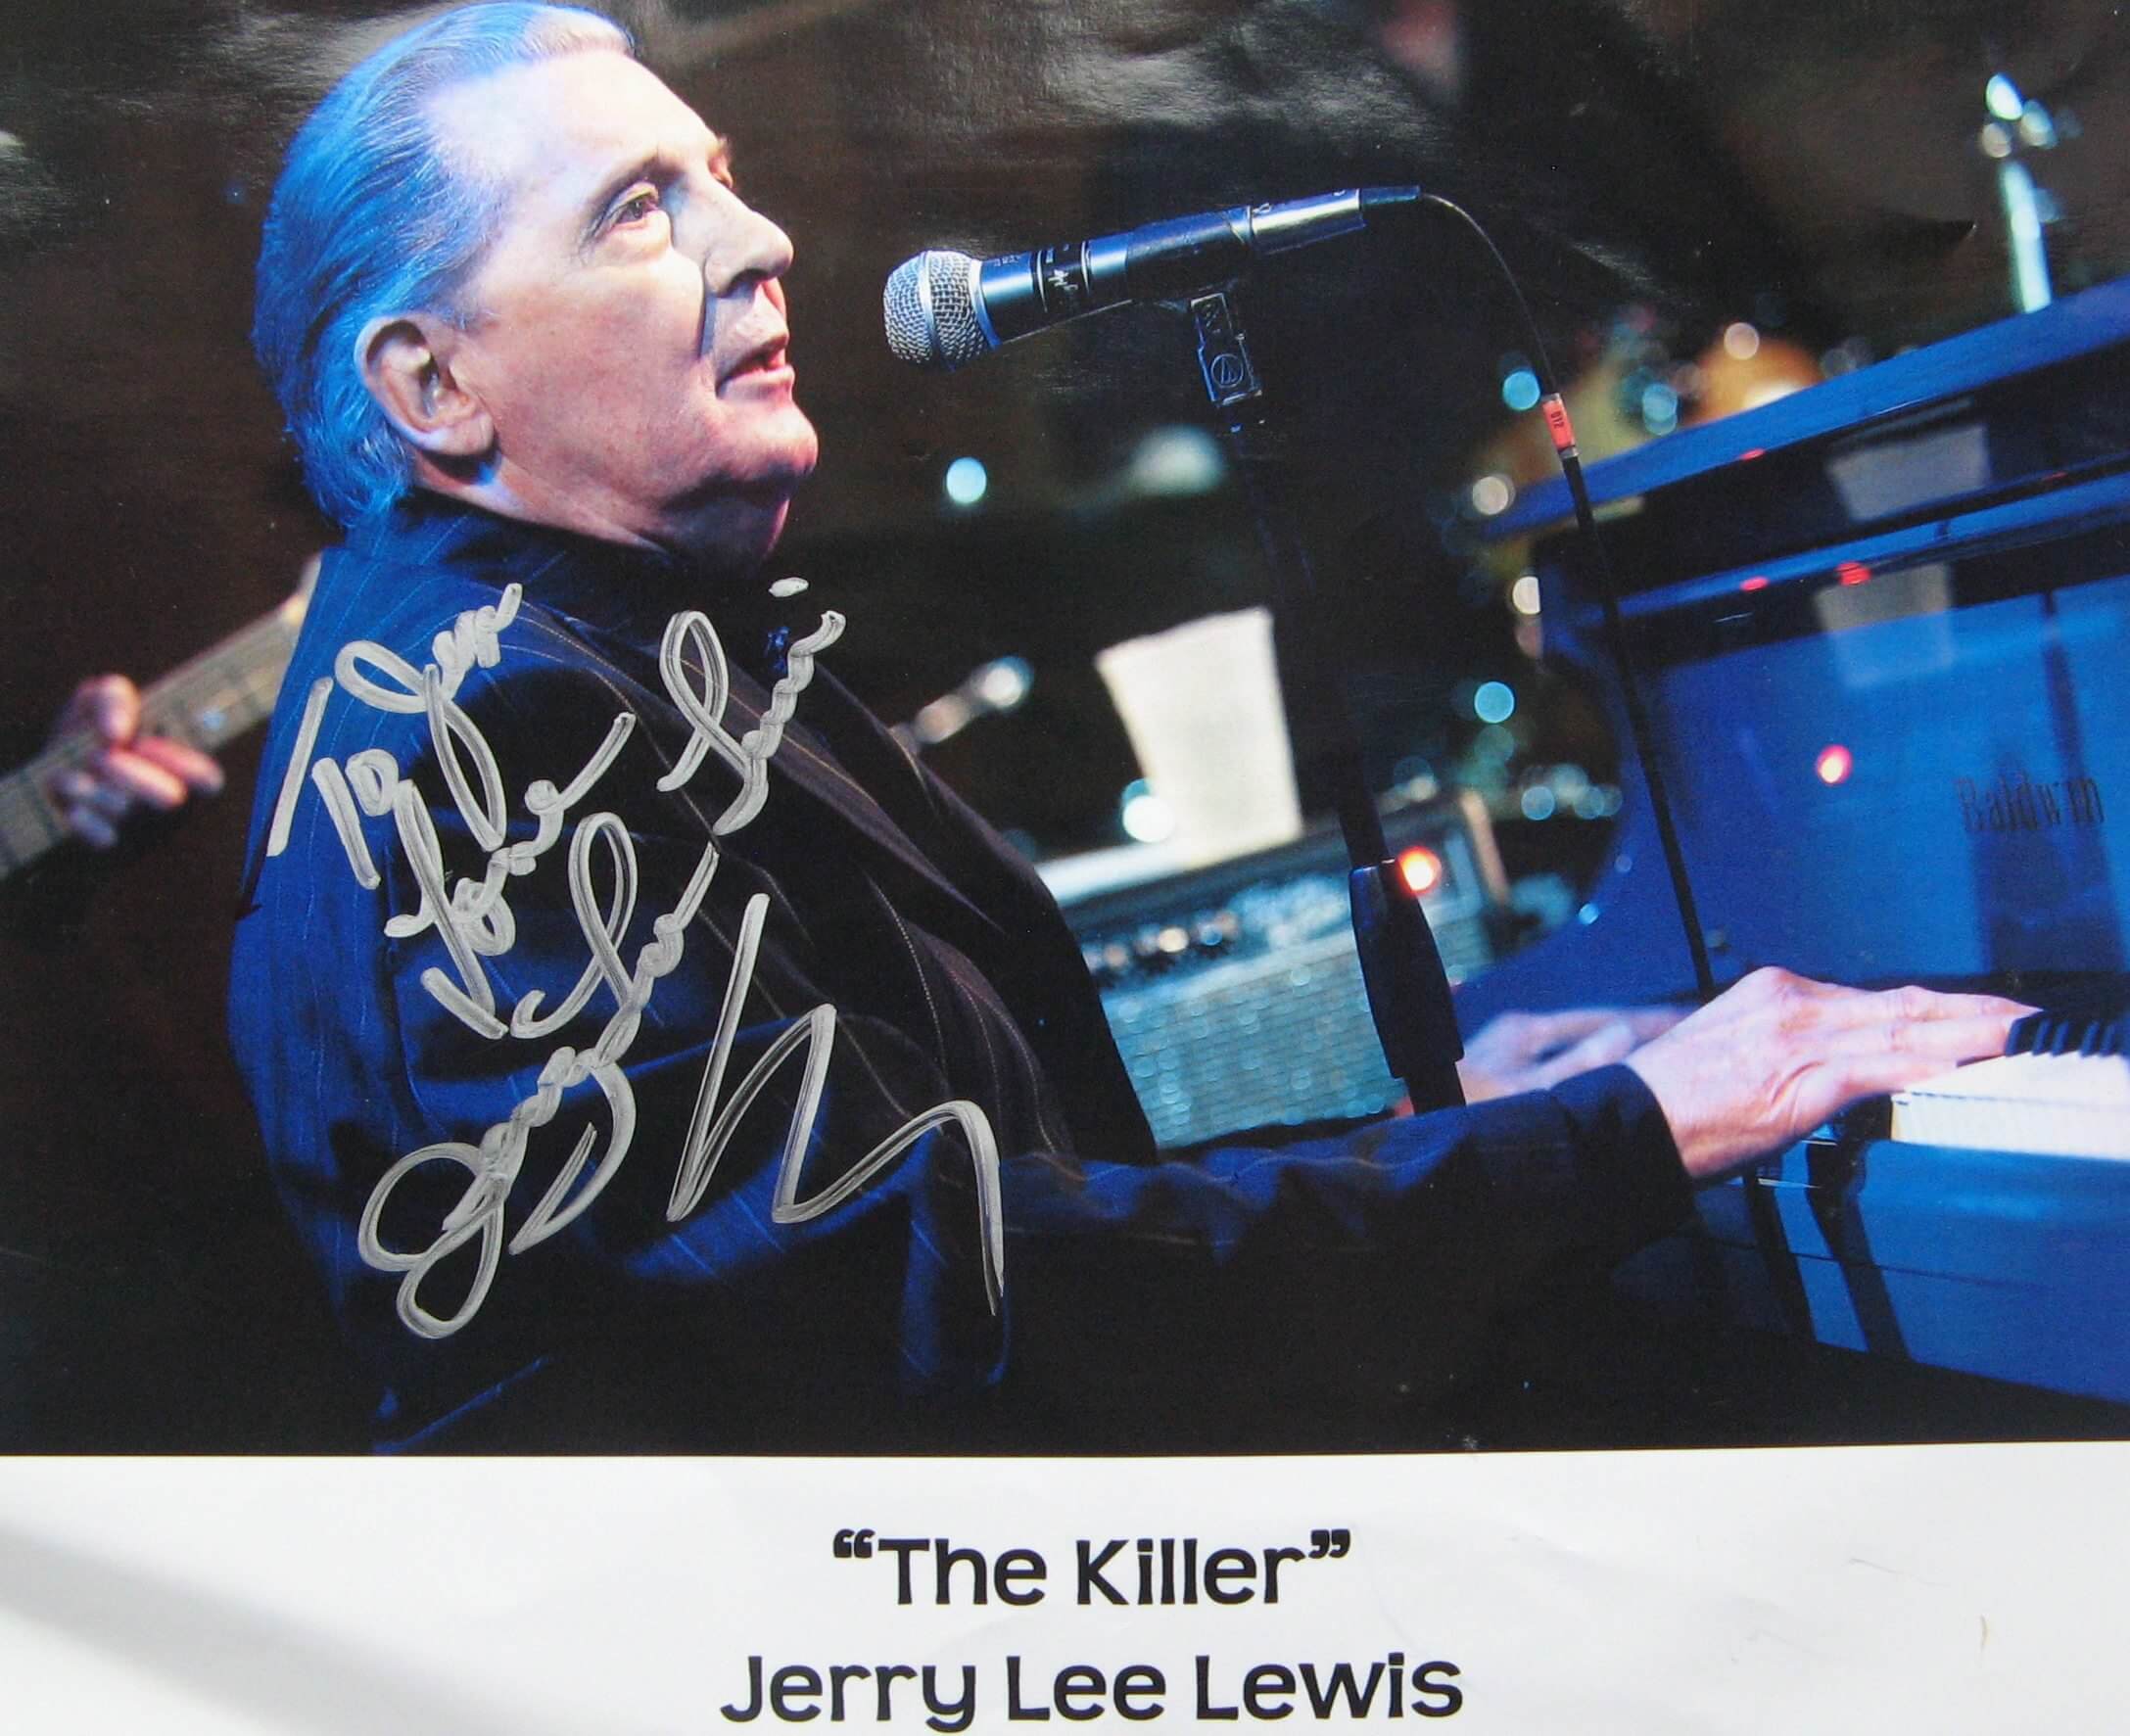 JERRY LEE LEWIS 1 autographed signed photo copy REPRINT 